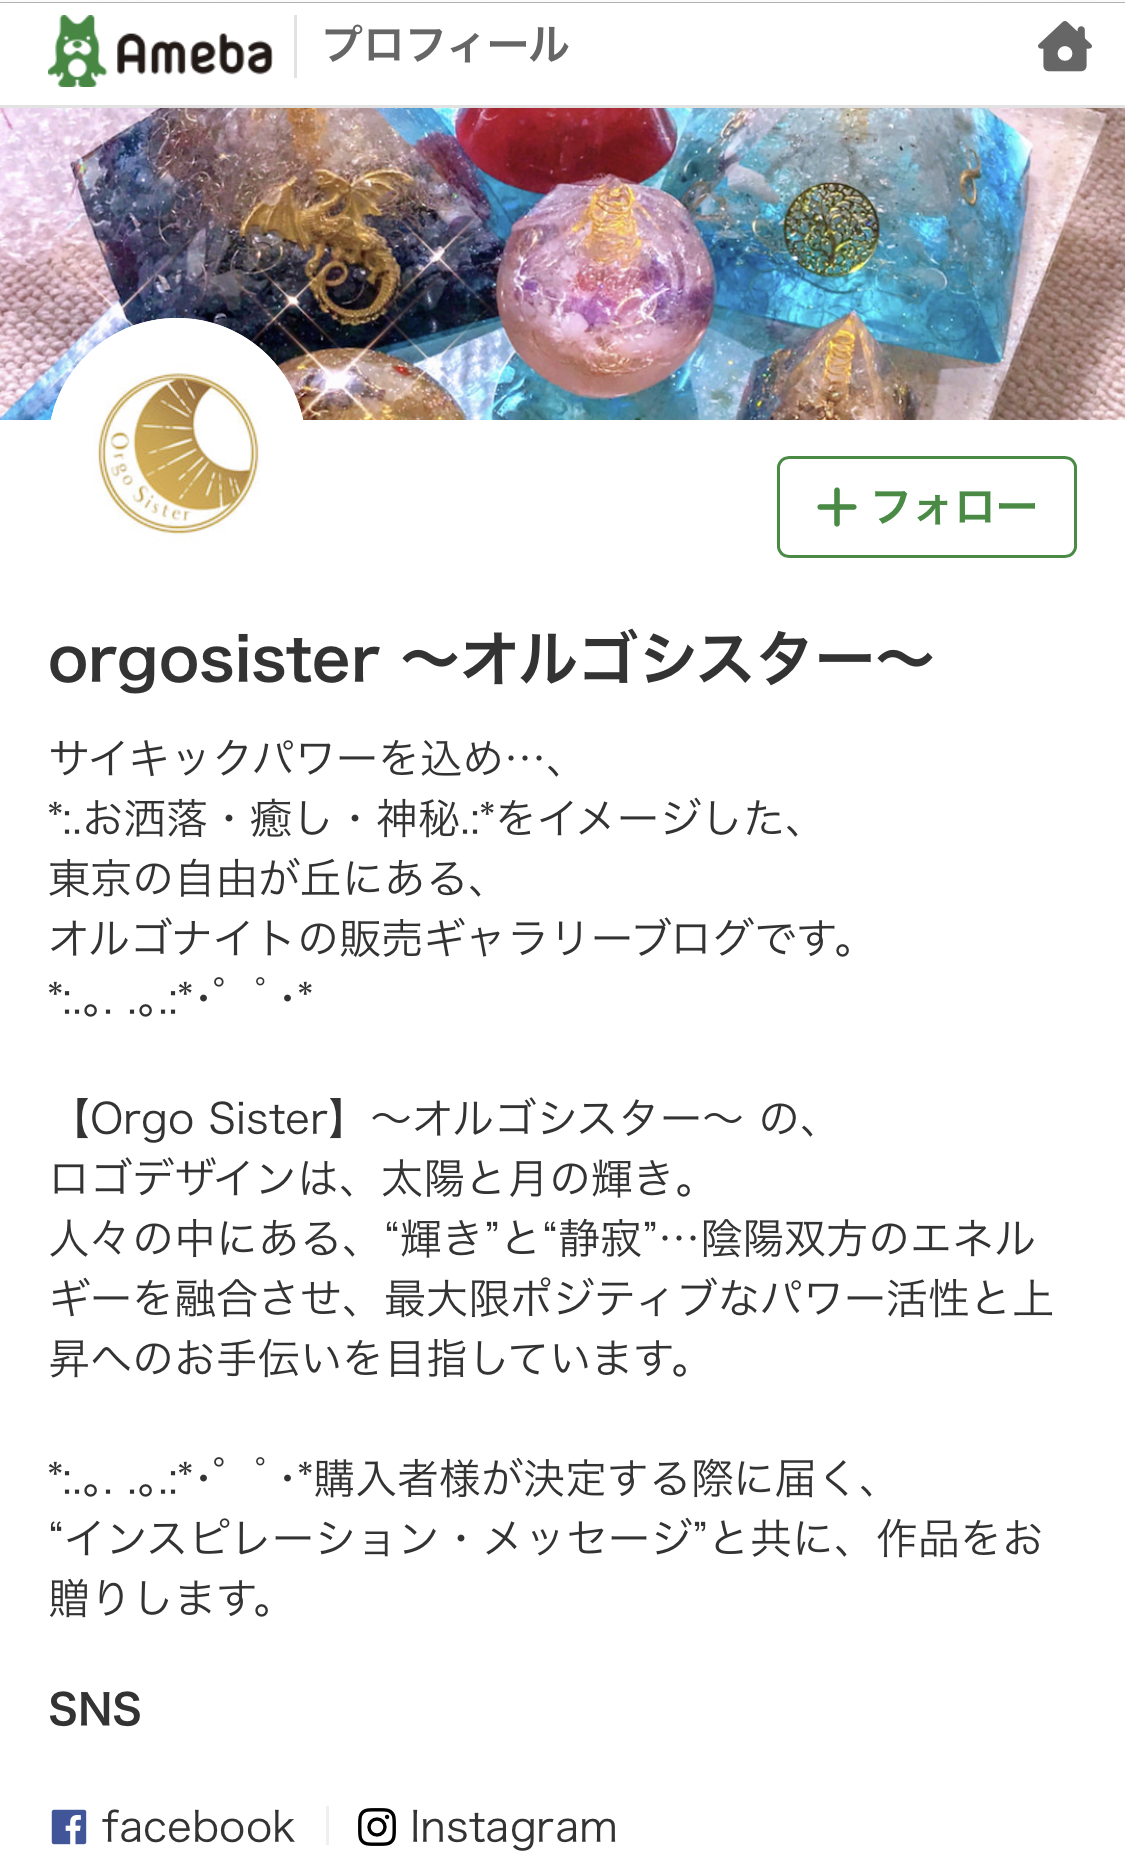 Amebaブログスタート【 Orgo Sister ニュース 】*･゜ﾟ･*: